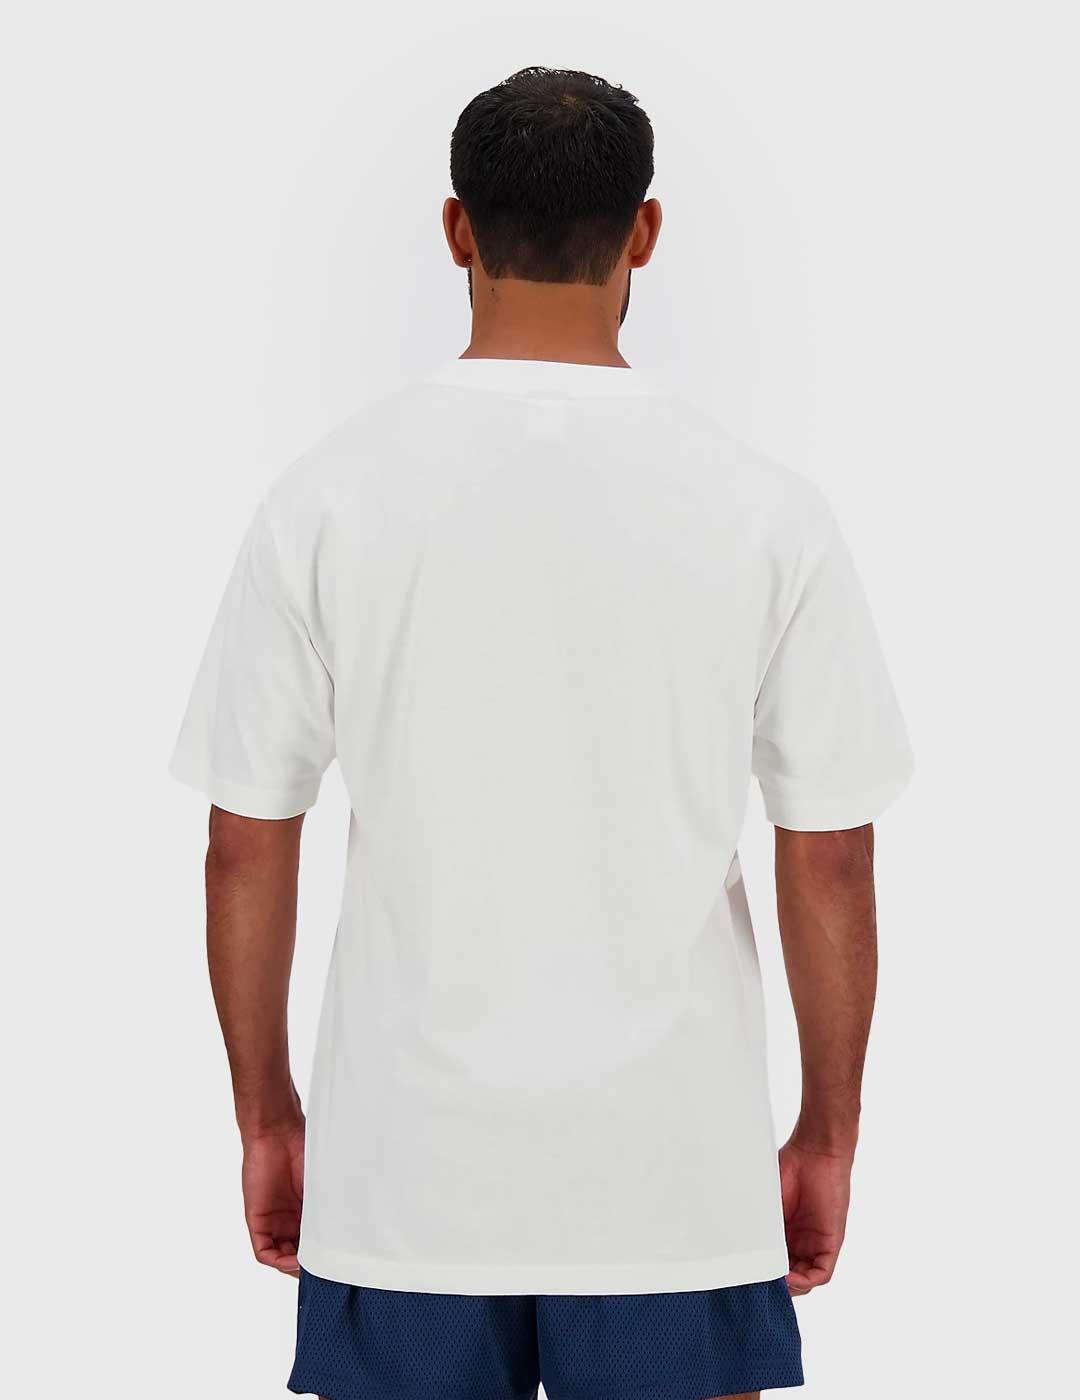 Camiseta new Balance Athletics Basketball blanca para hombre